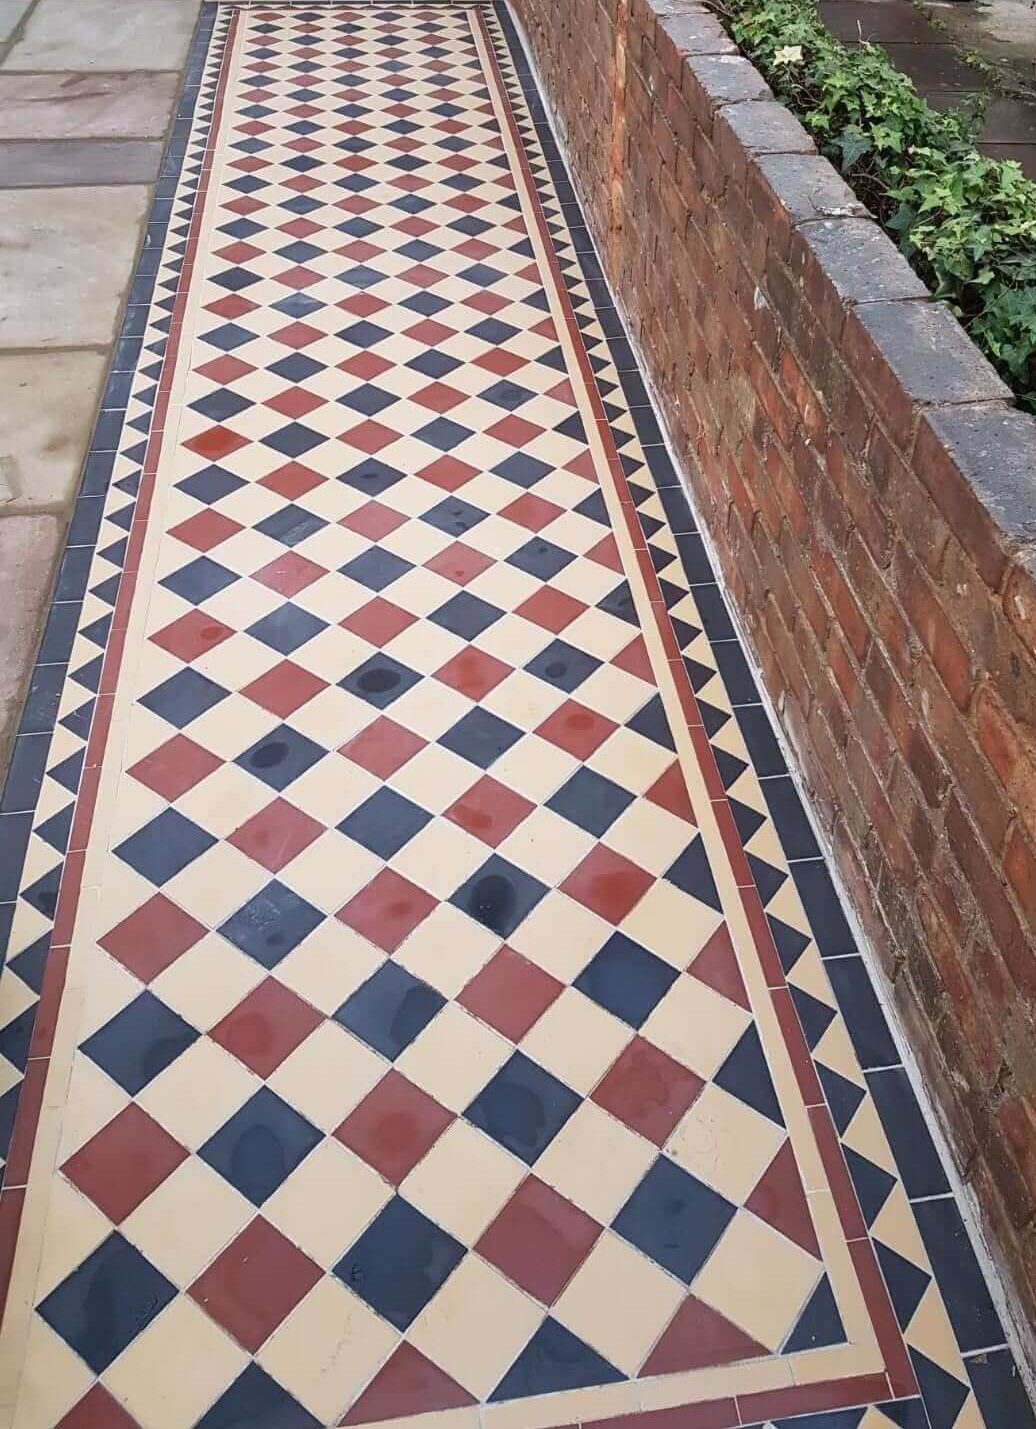  Edwardian Path Tile Installation Company Plumstead SE18